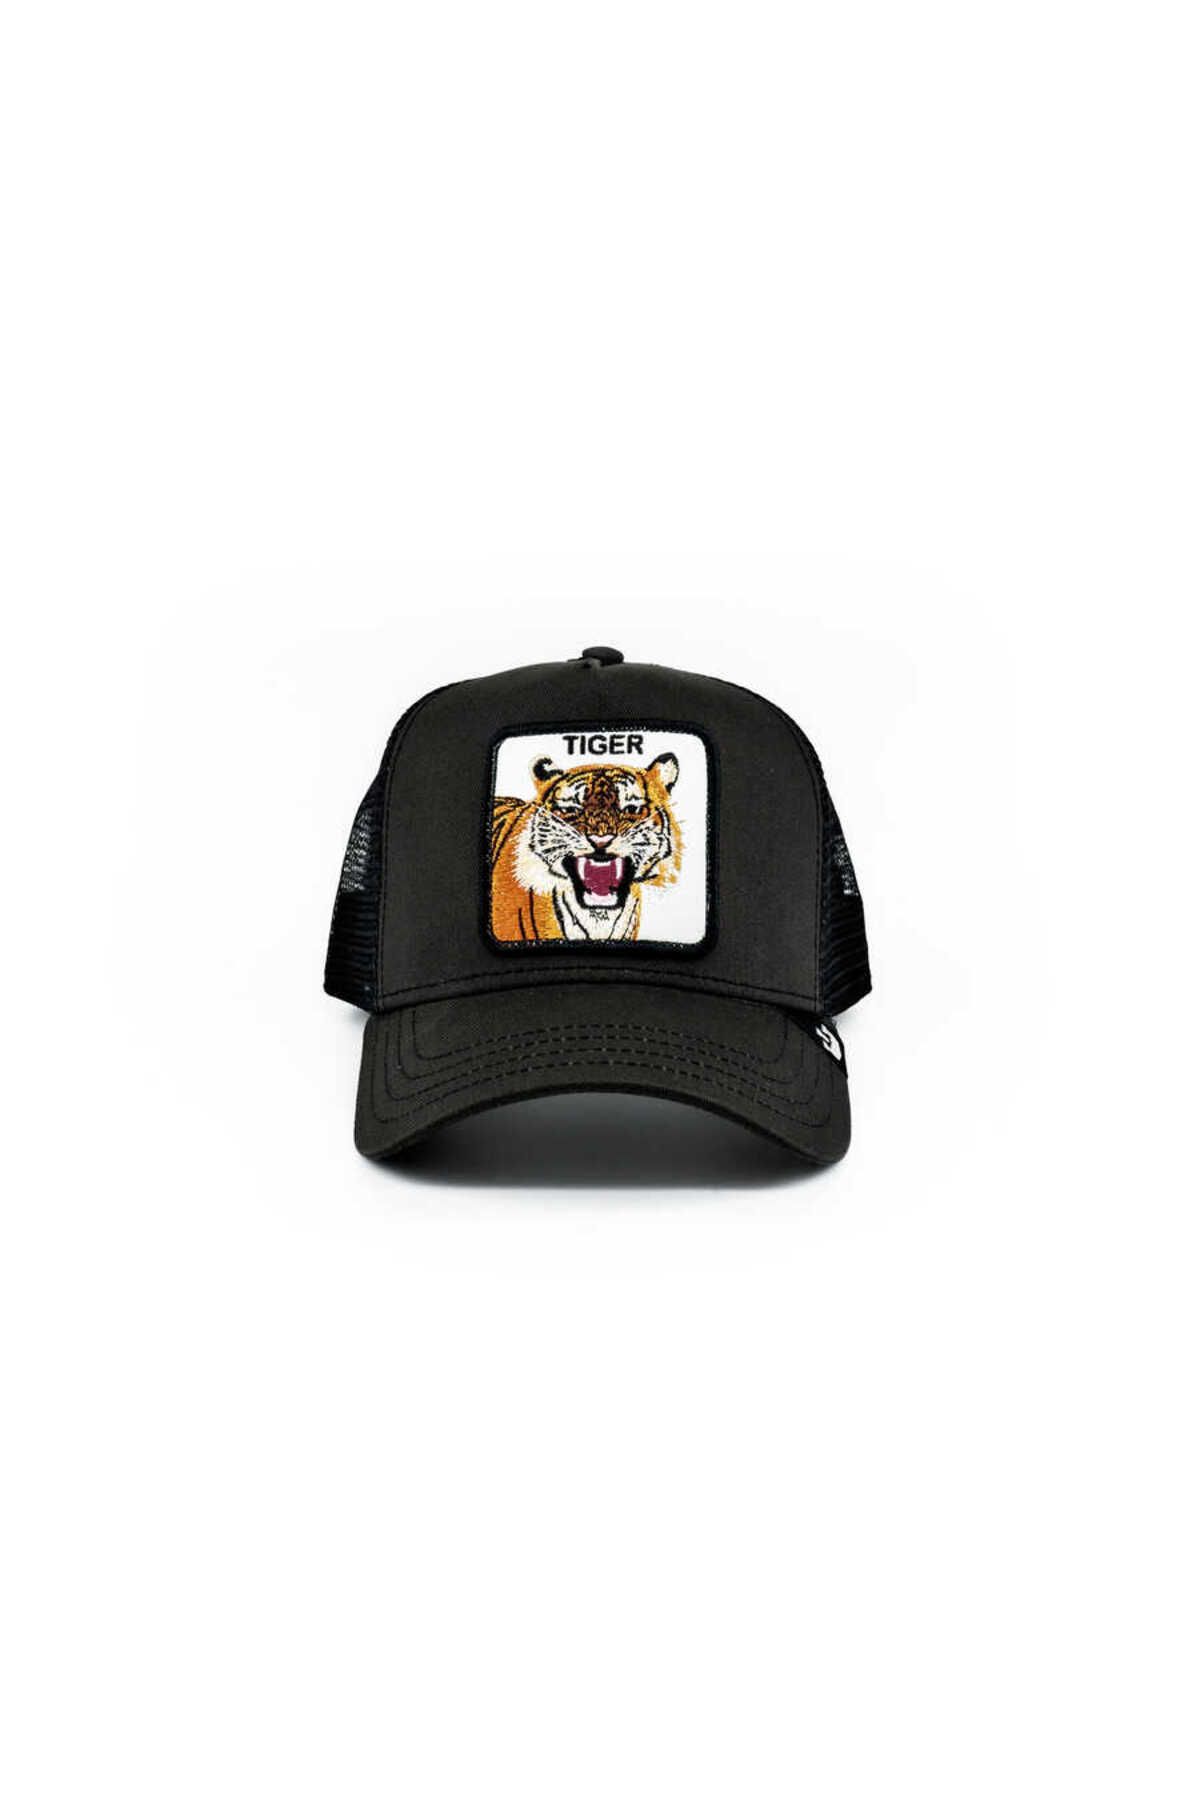 Goorin Bros 101-0415 The Tiger (KAPLAN FİGÜRLÜ) Siyah Şapka